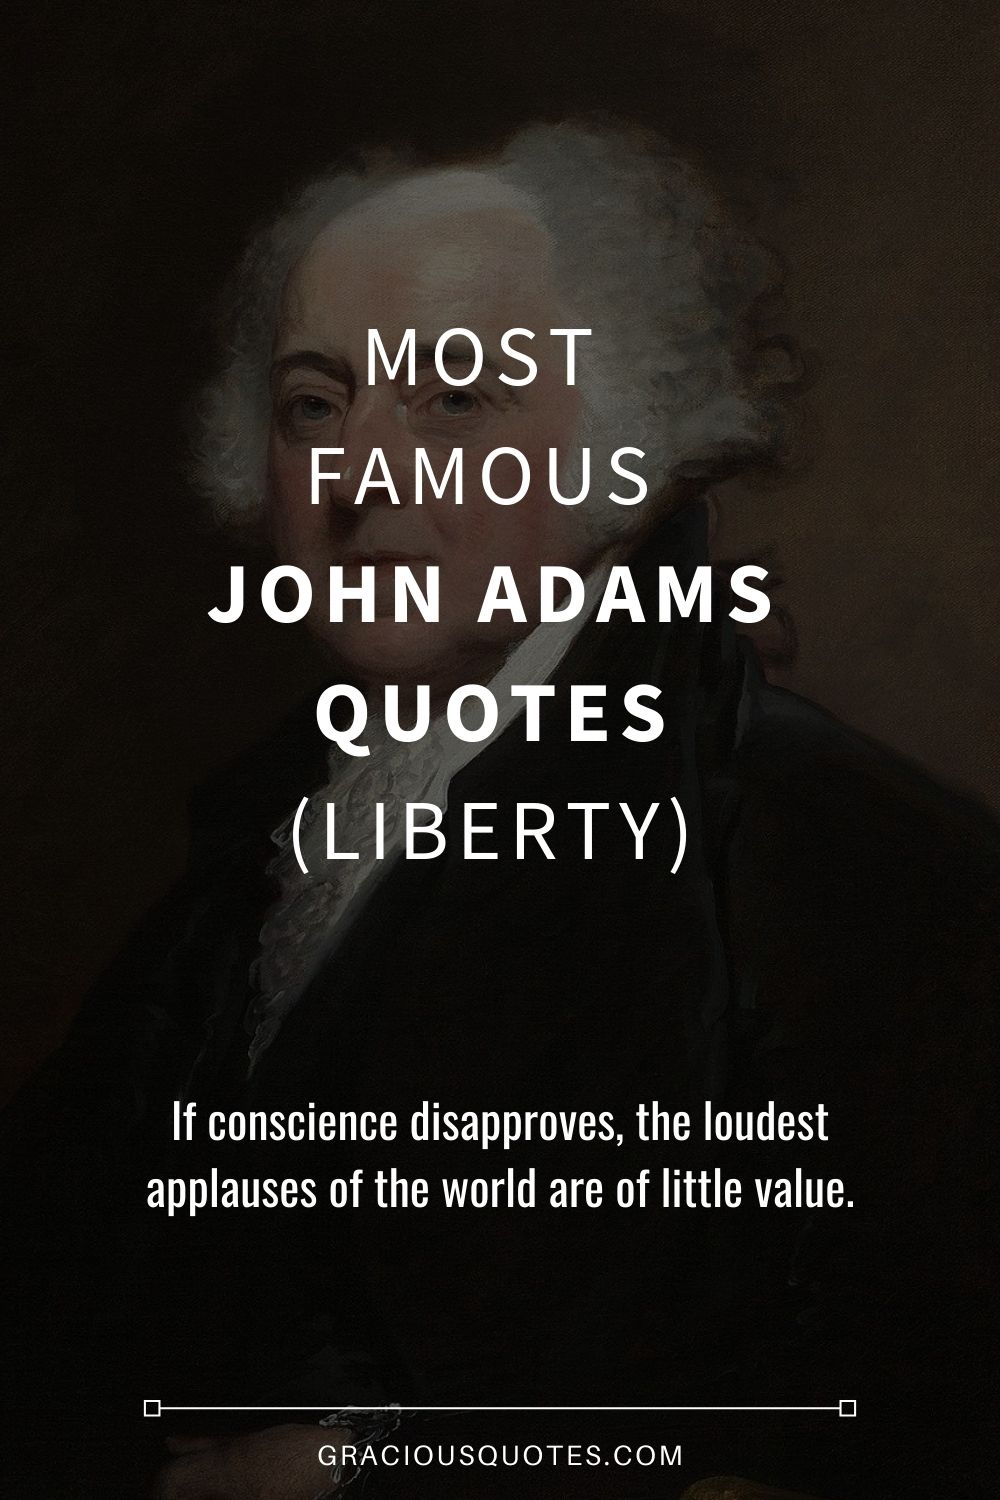 Most Famous John Adams Quotes (LIBERTY) - Gracious Quotes